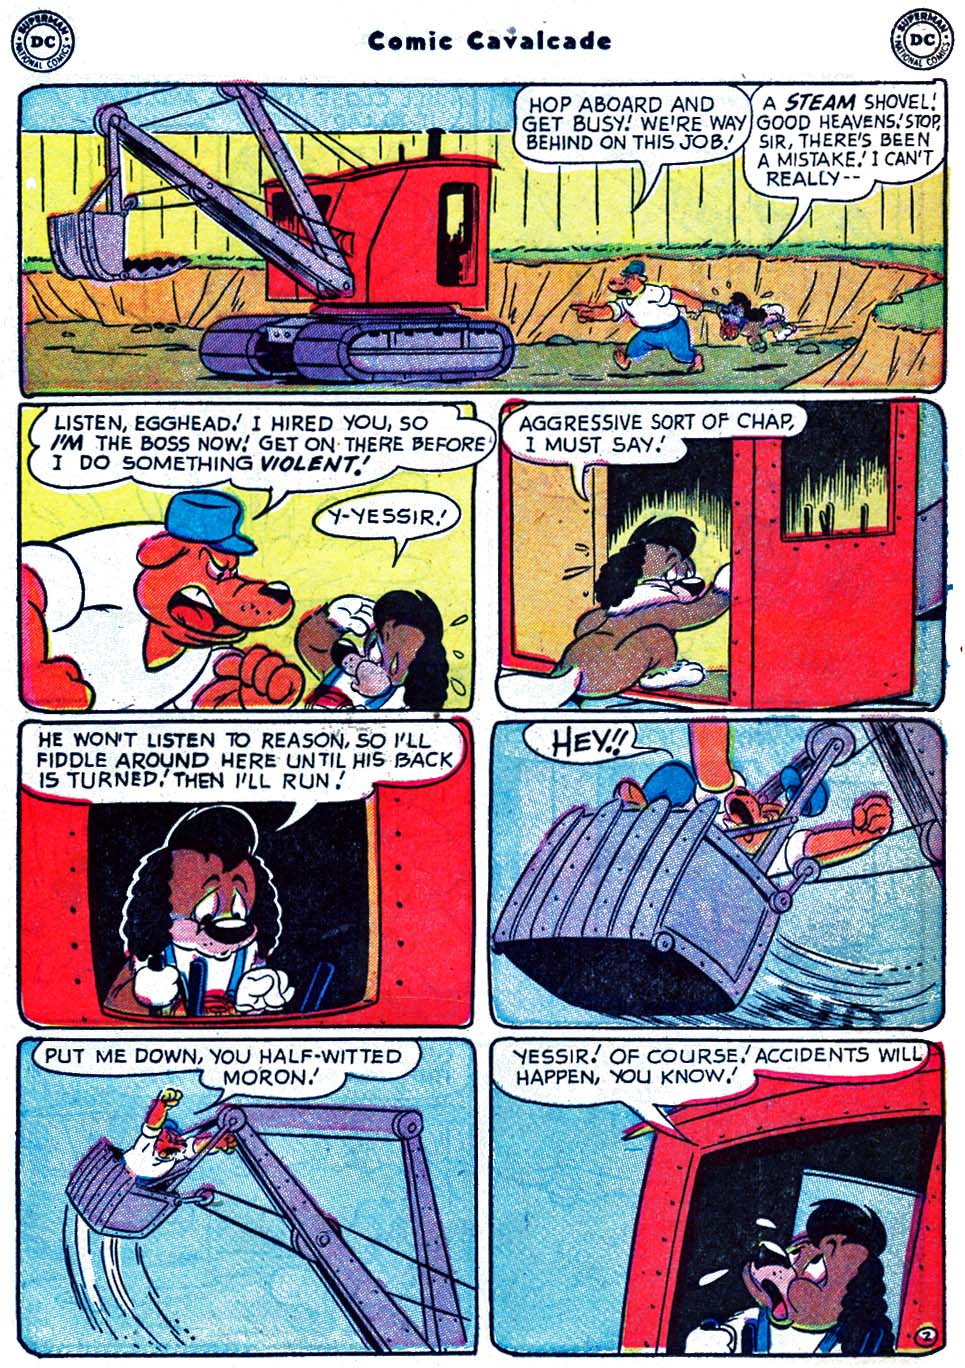 Comic Cavalcade issue 53 - Page 31